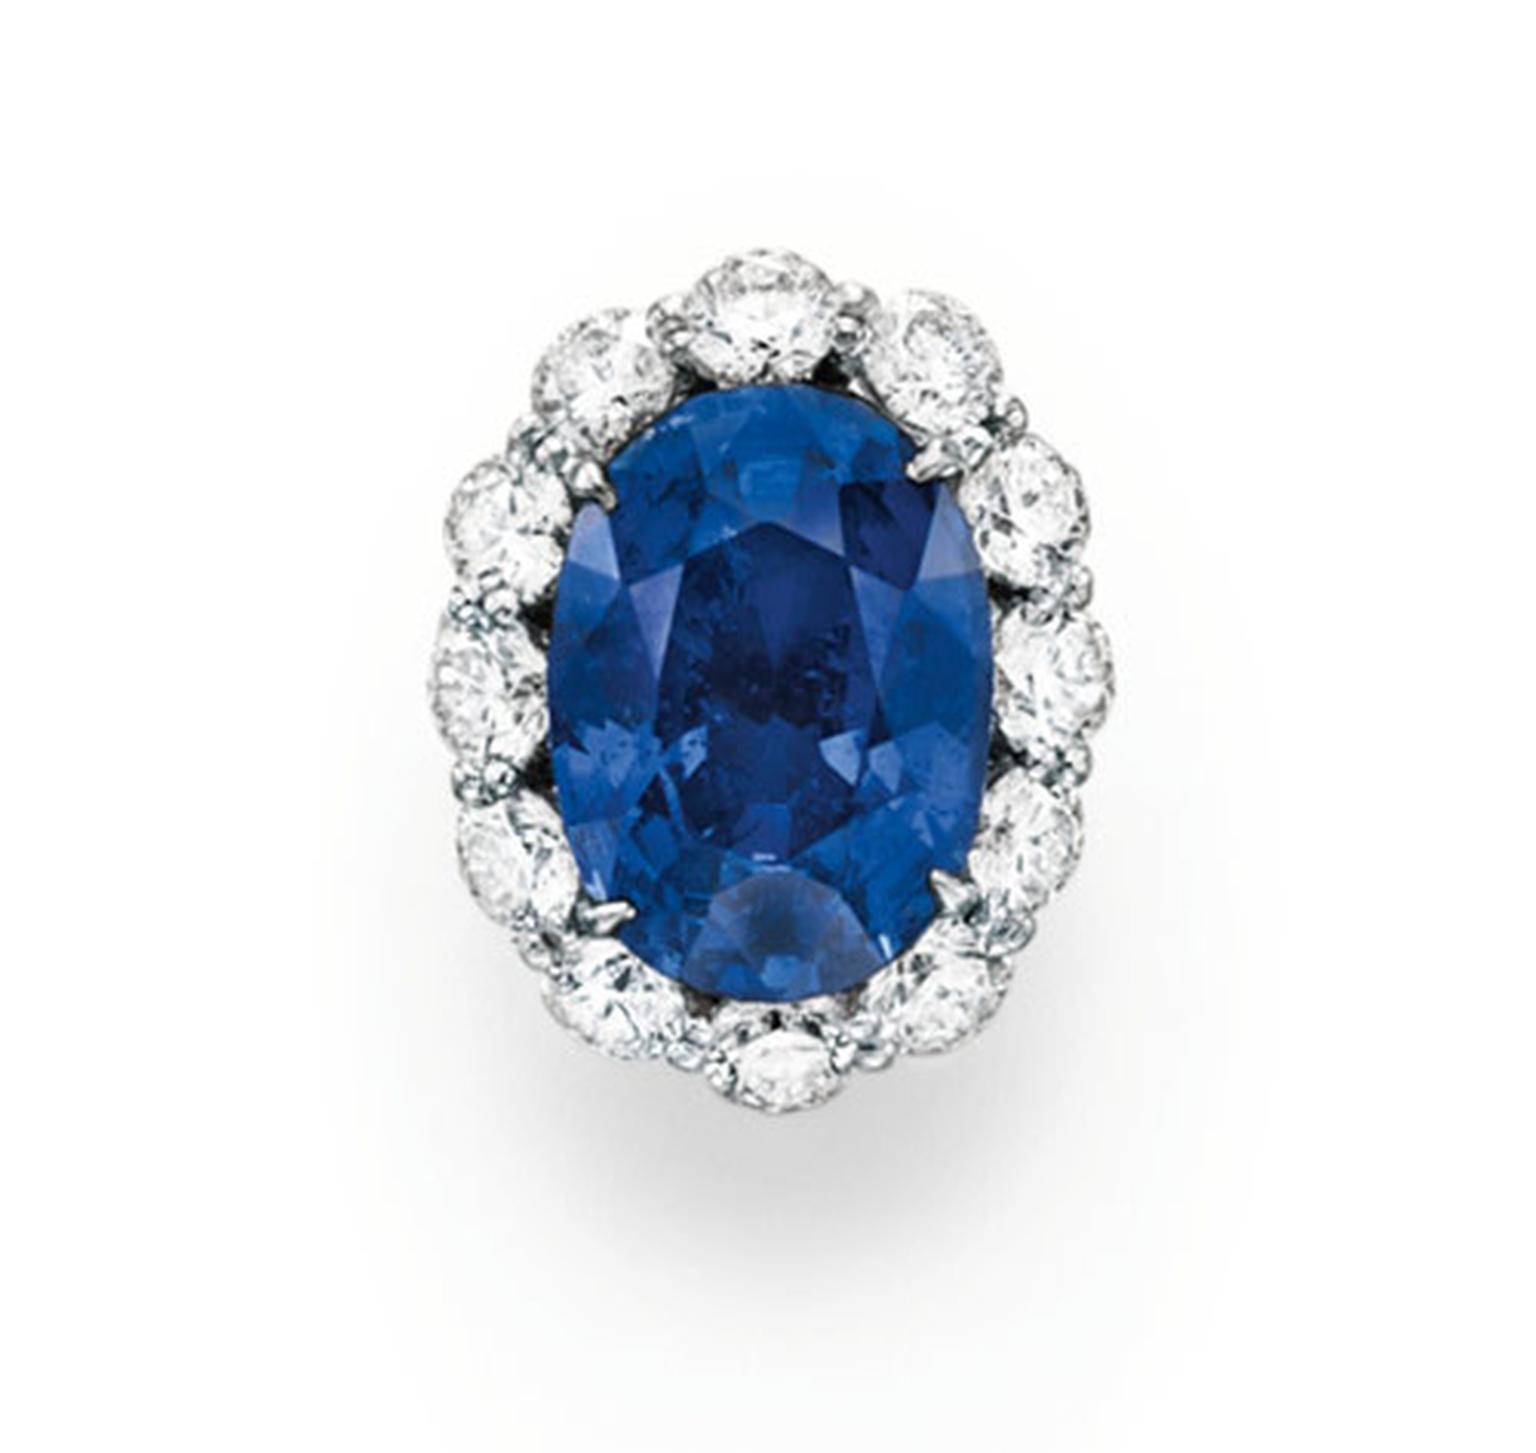 Christies-Oval-Cut-Burmese-Sapphire-Diamond-Ring.jpg